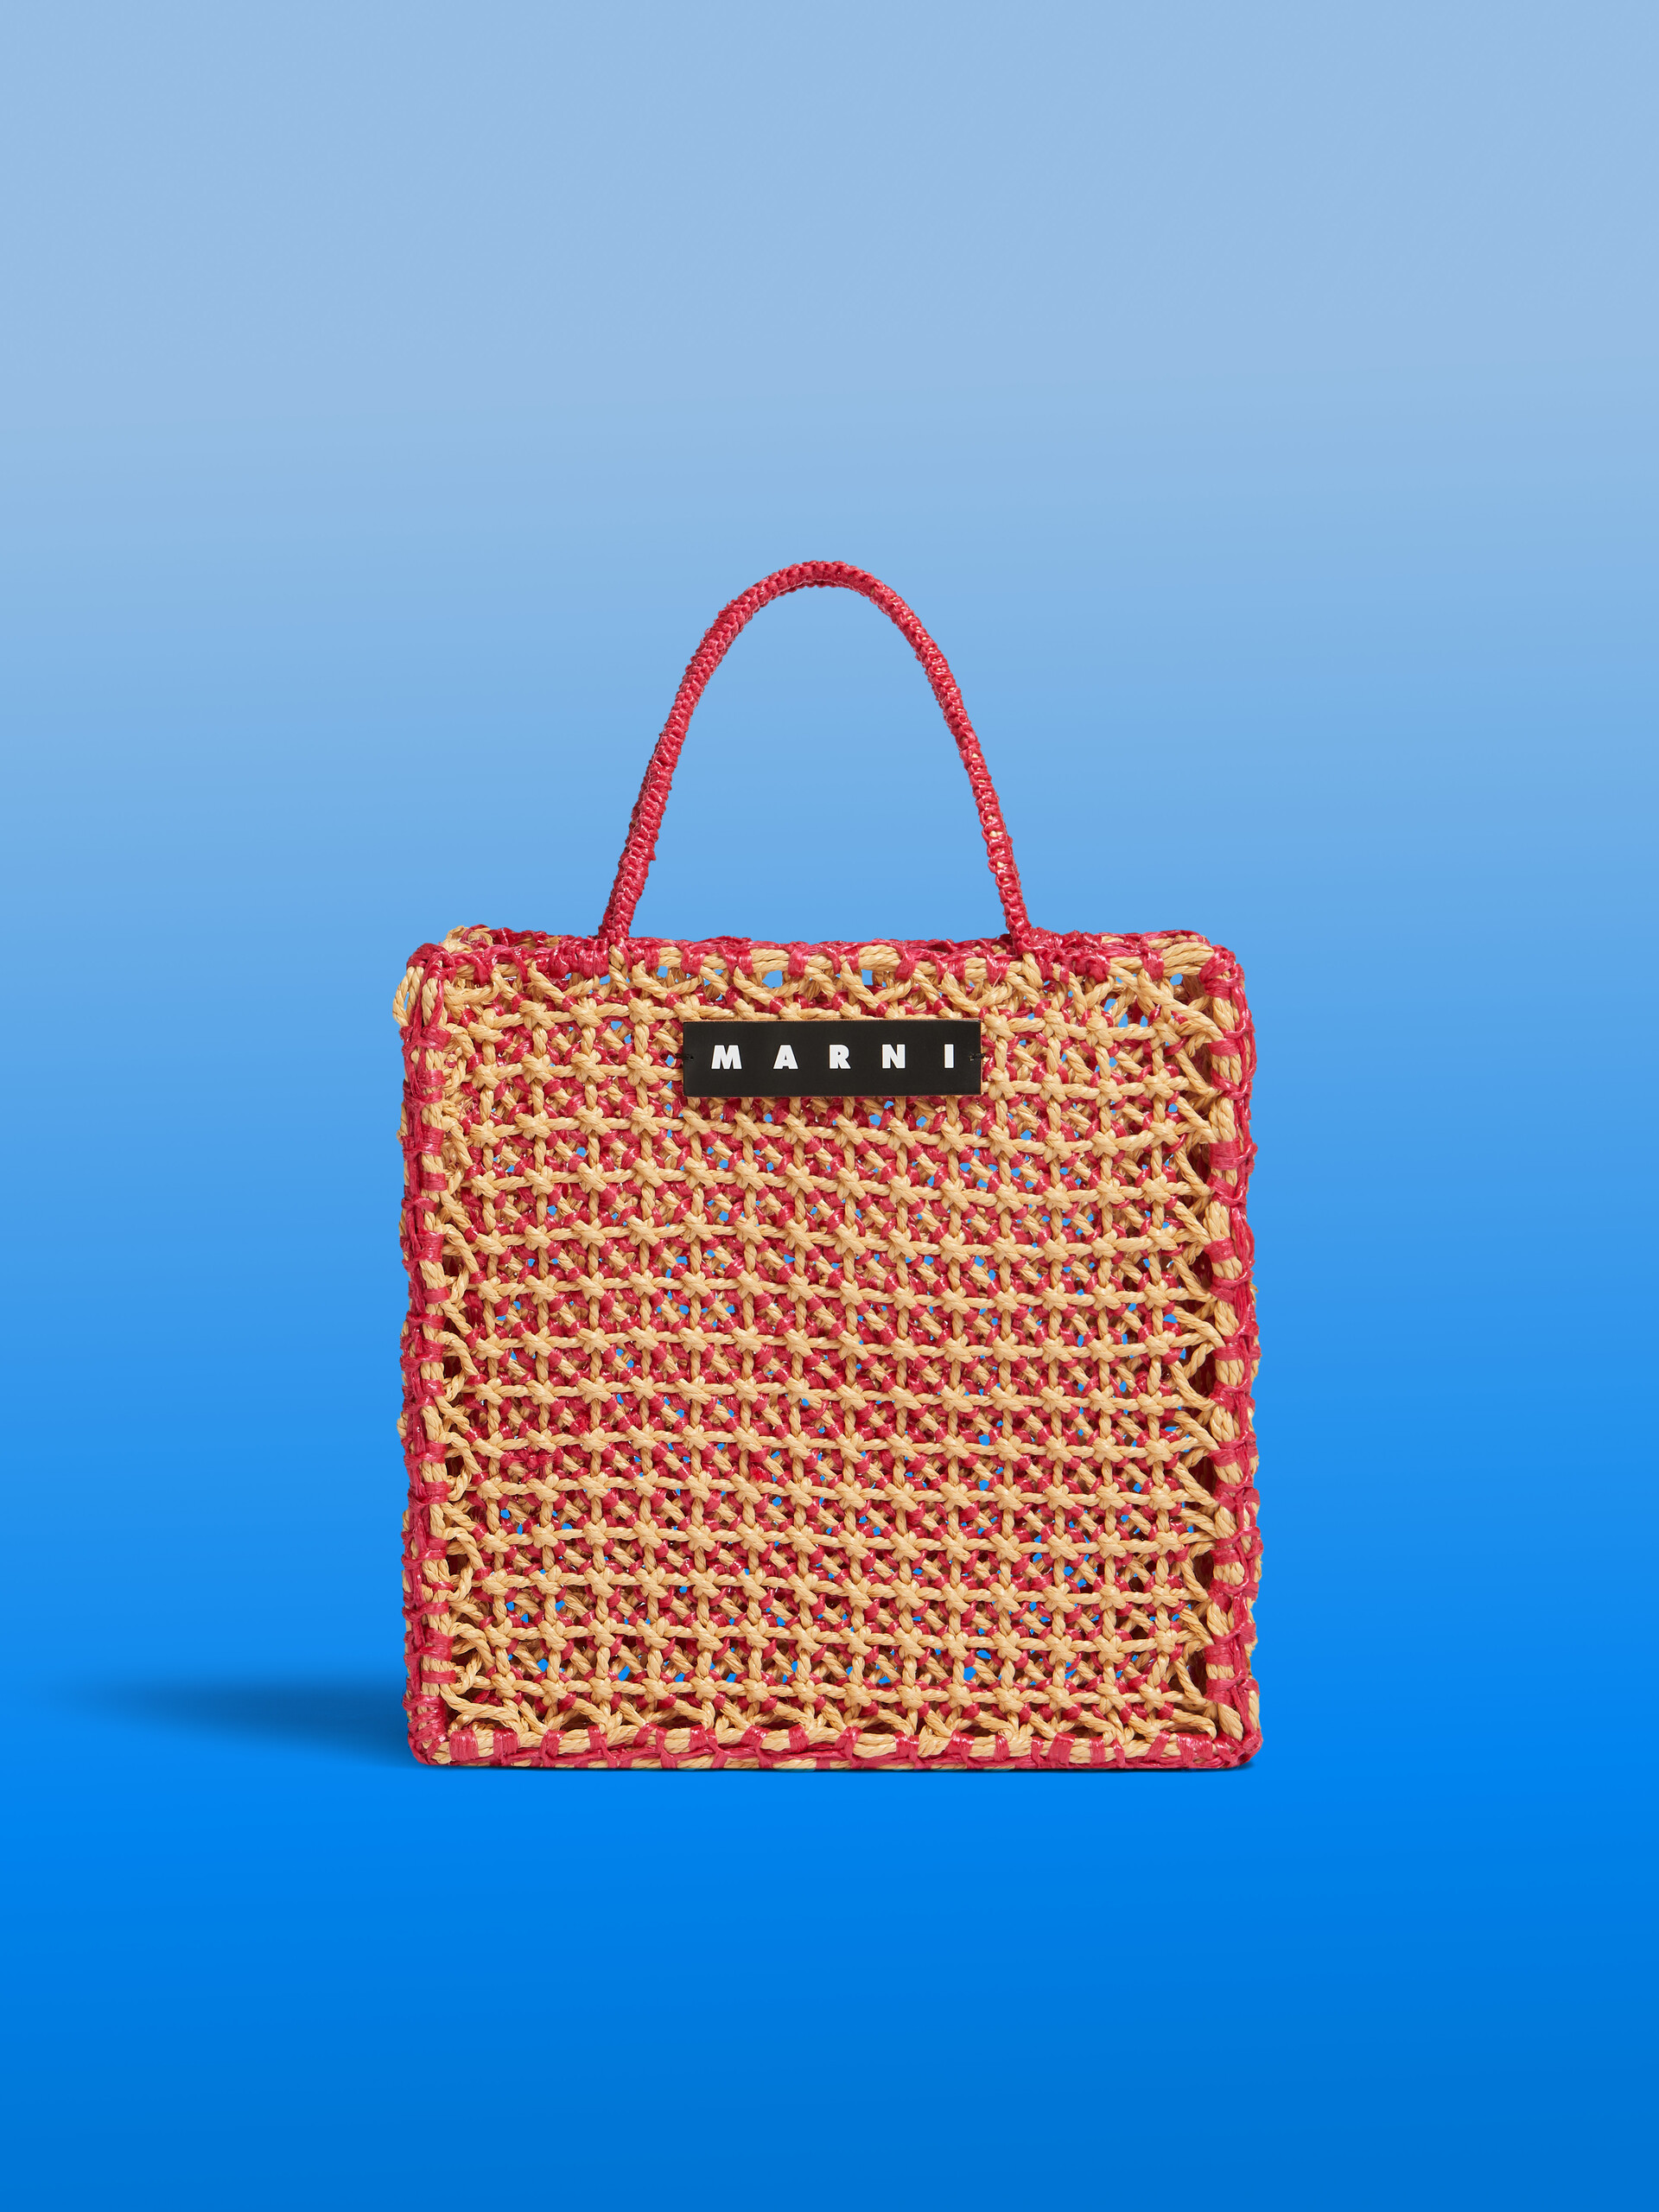 MARNI MARKET MINI JURTA bag in red yellow and green crochet - Shopping Bags - Image 1